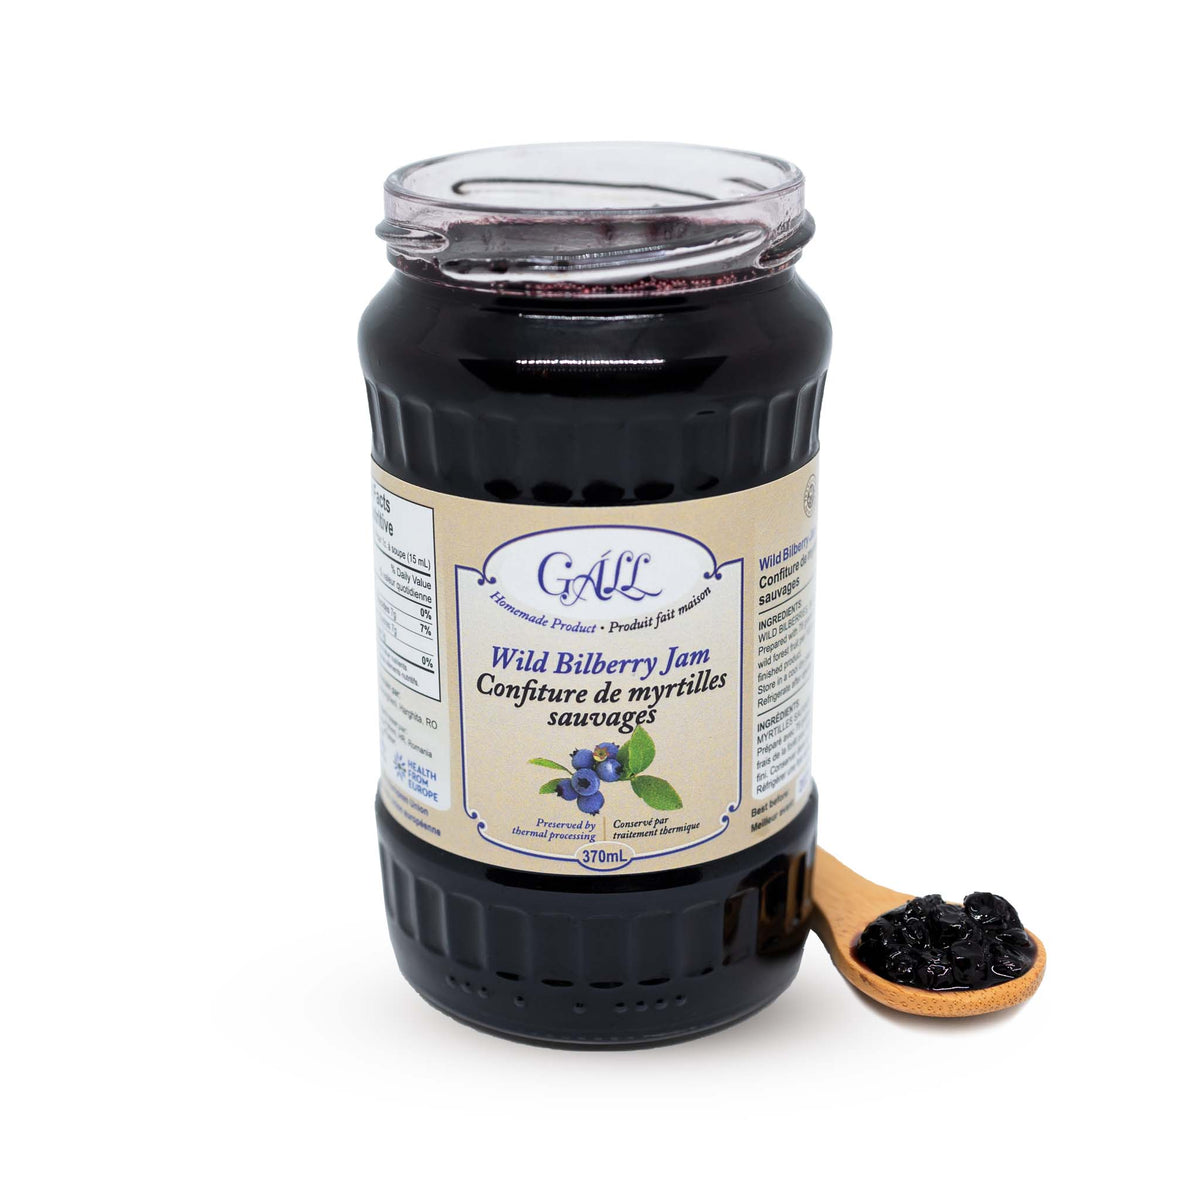 Artisanal Wild Bilberry Jam open jar spoon Health from Europe